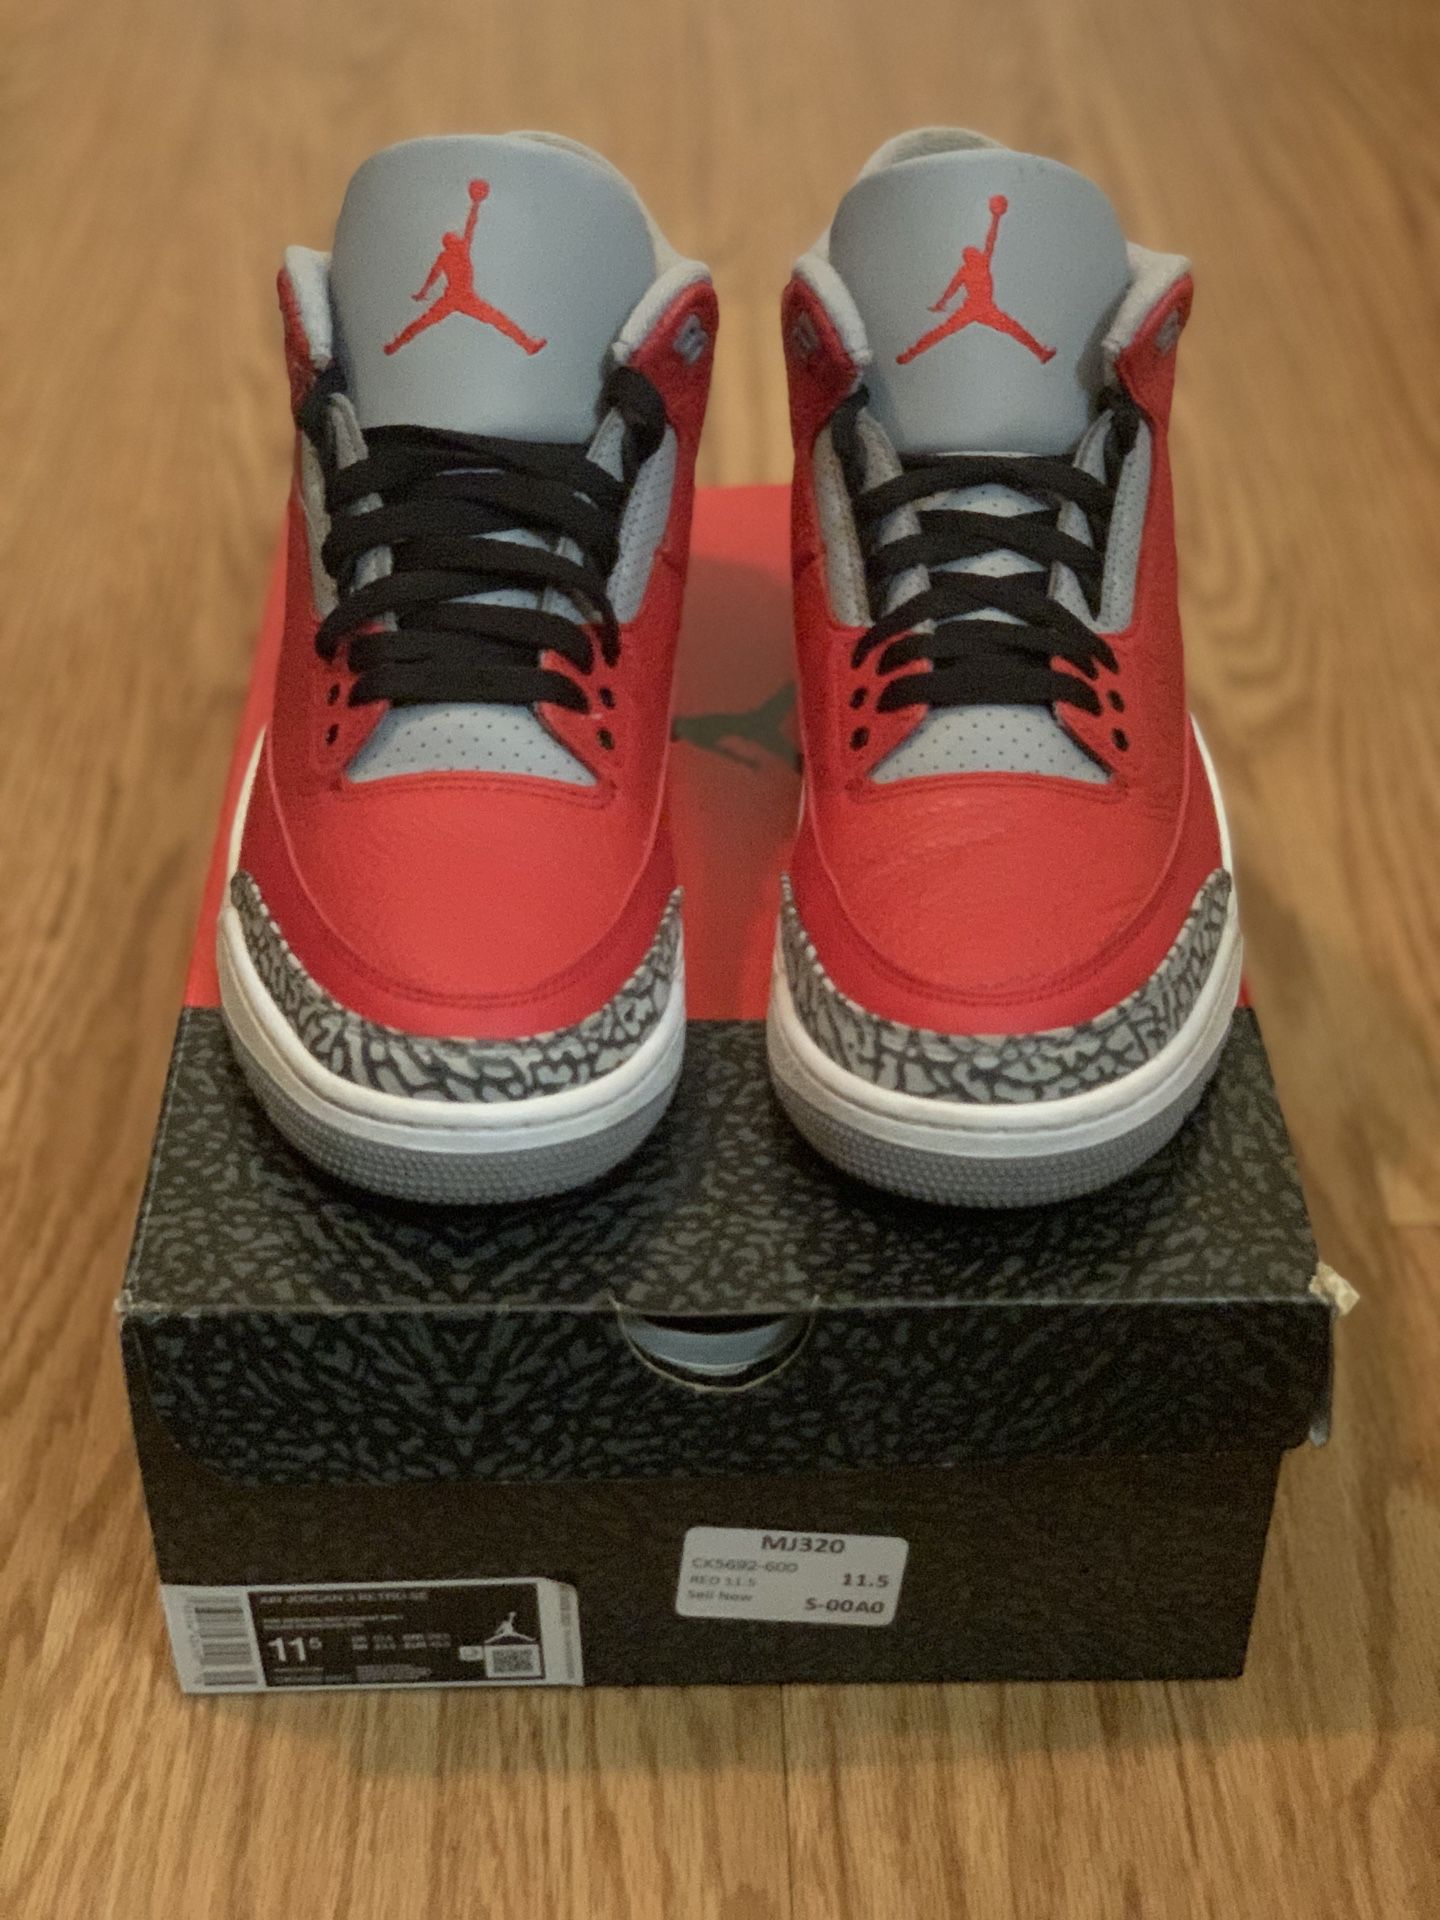 Air Jordan Retro 3 “Red Cement” size 11.5